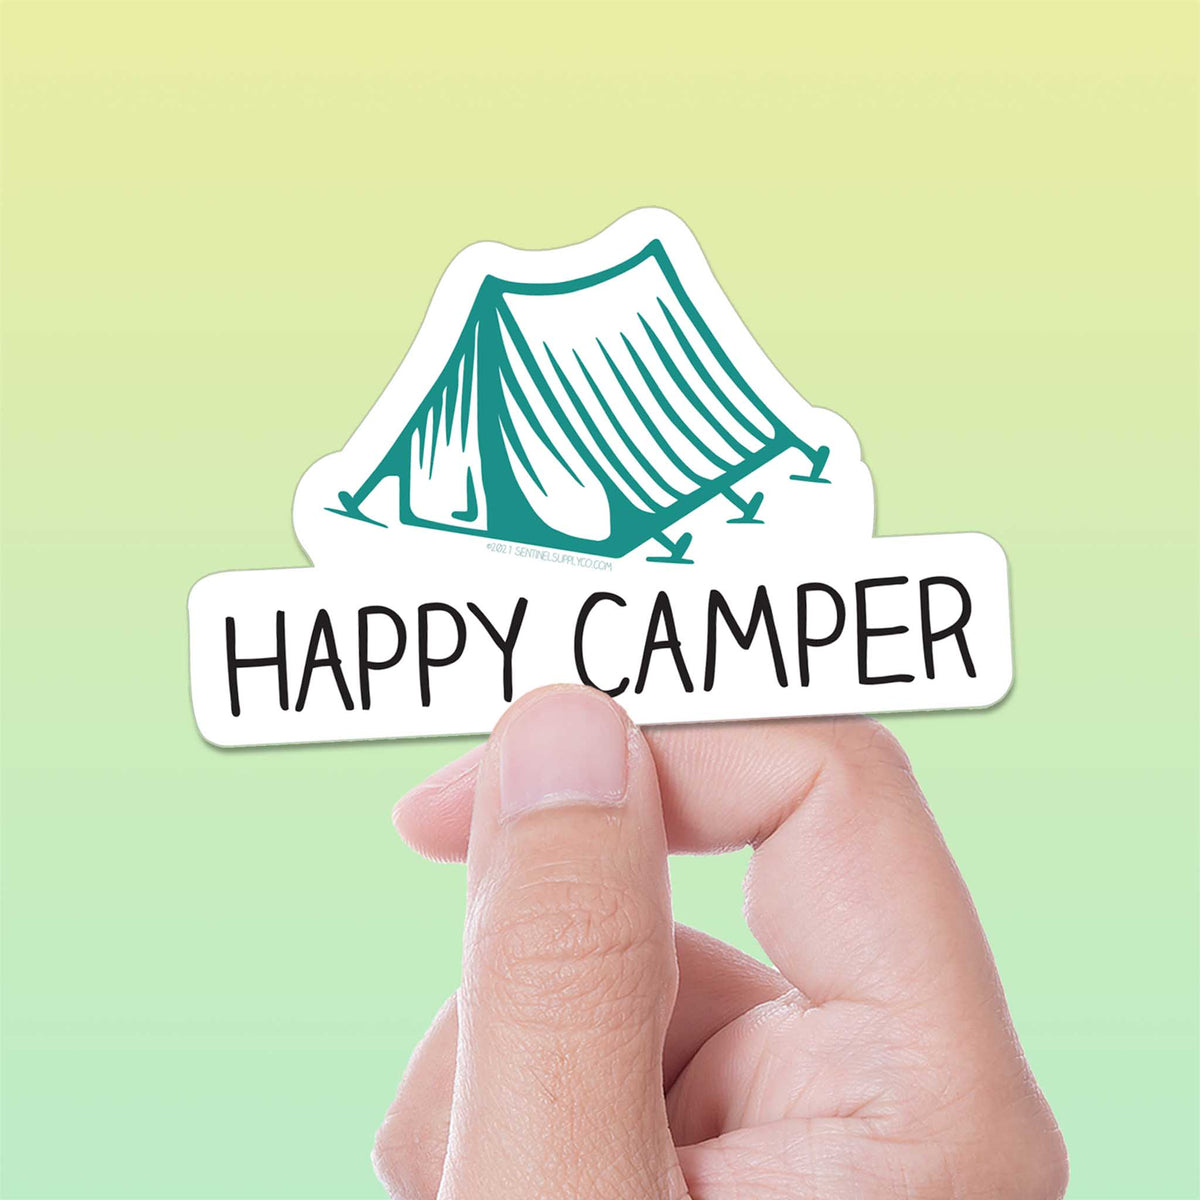 Happy Camper Tent Camping Bumper Sticker for Car